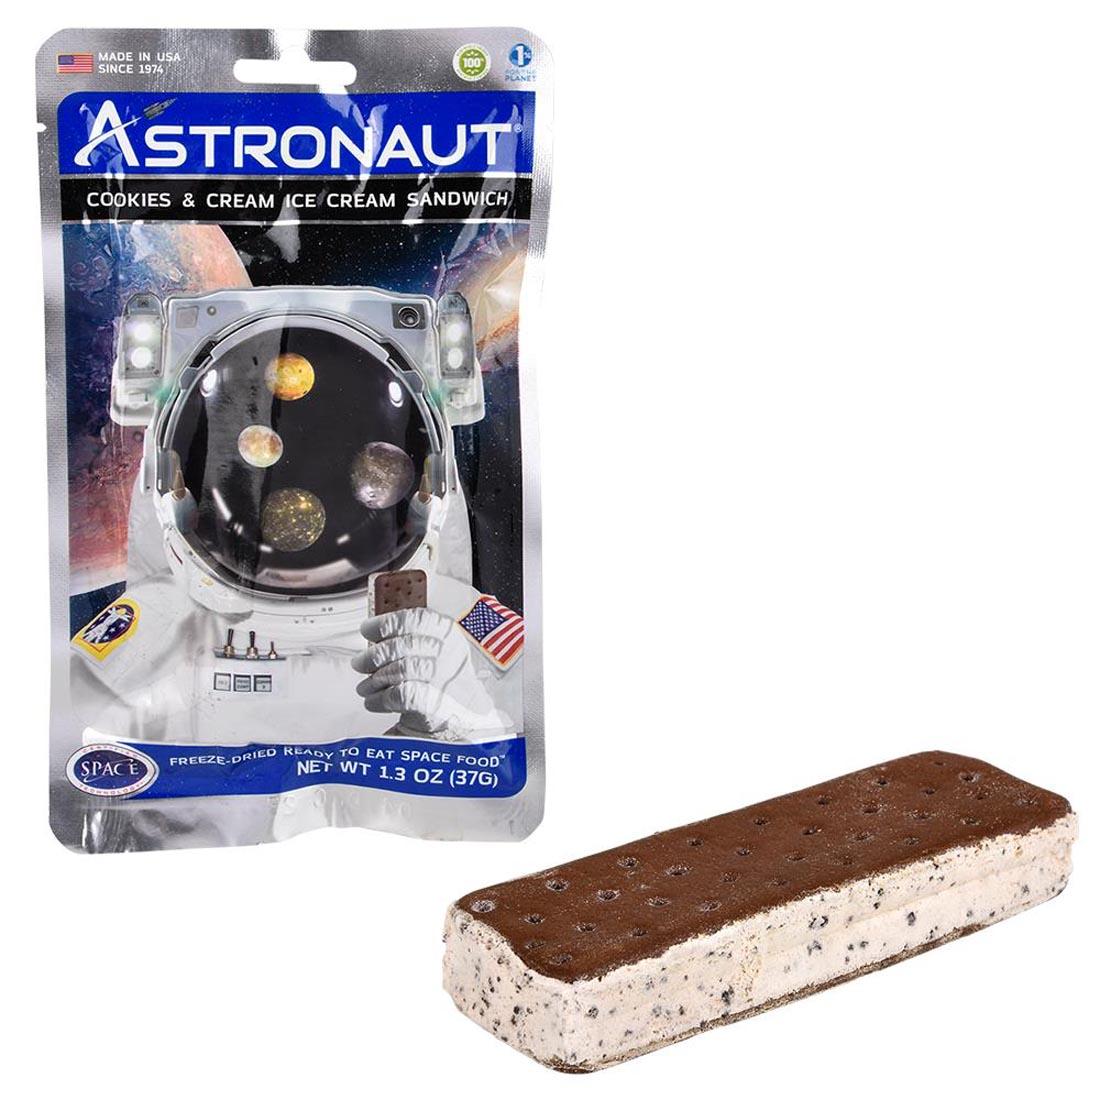 Astronaut Cookies & Cream Ice Cream Sandwich next to an unopened package